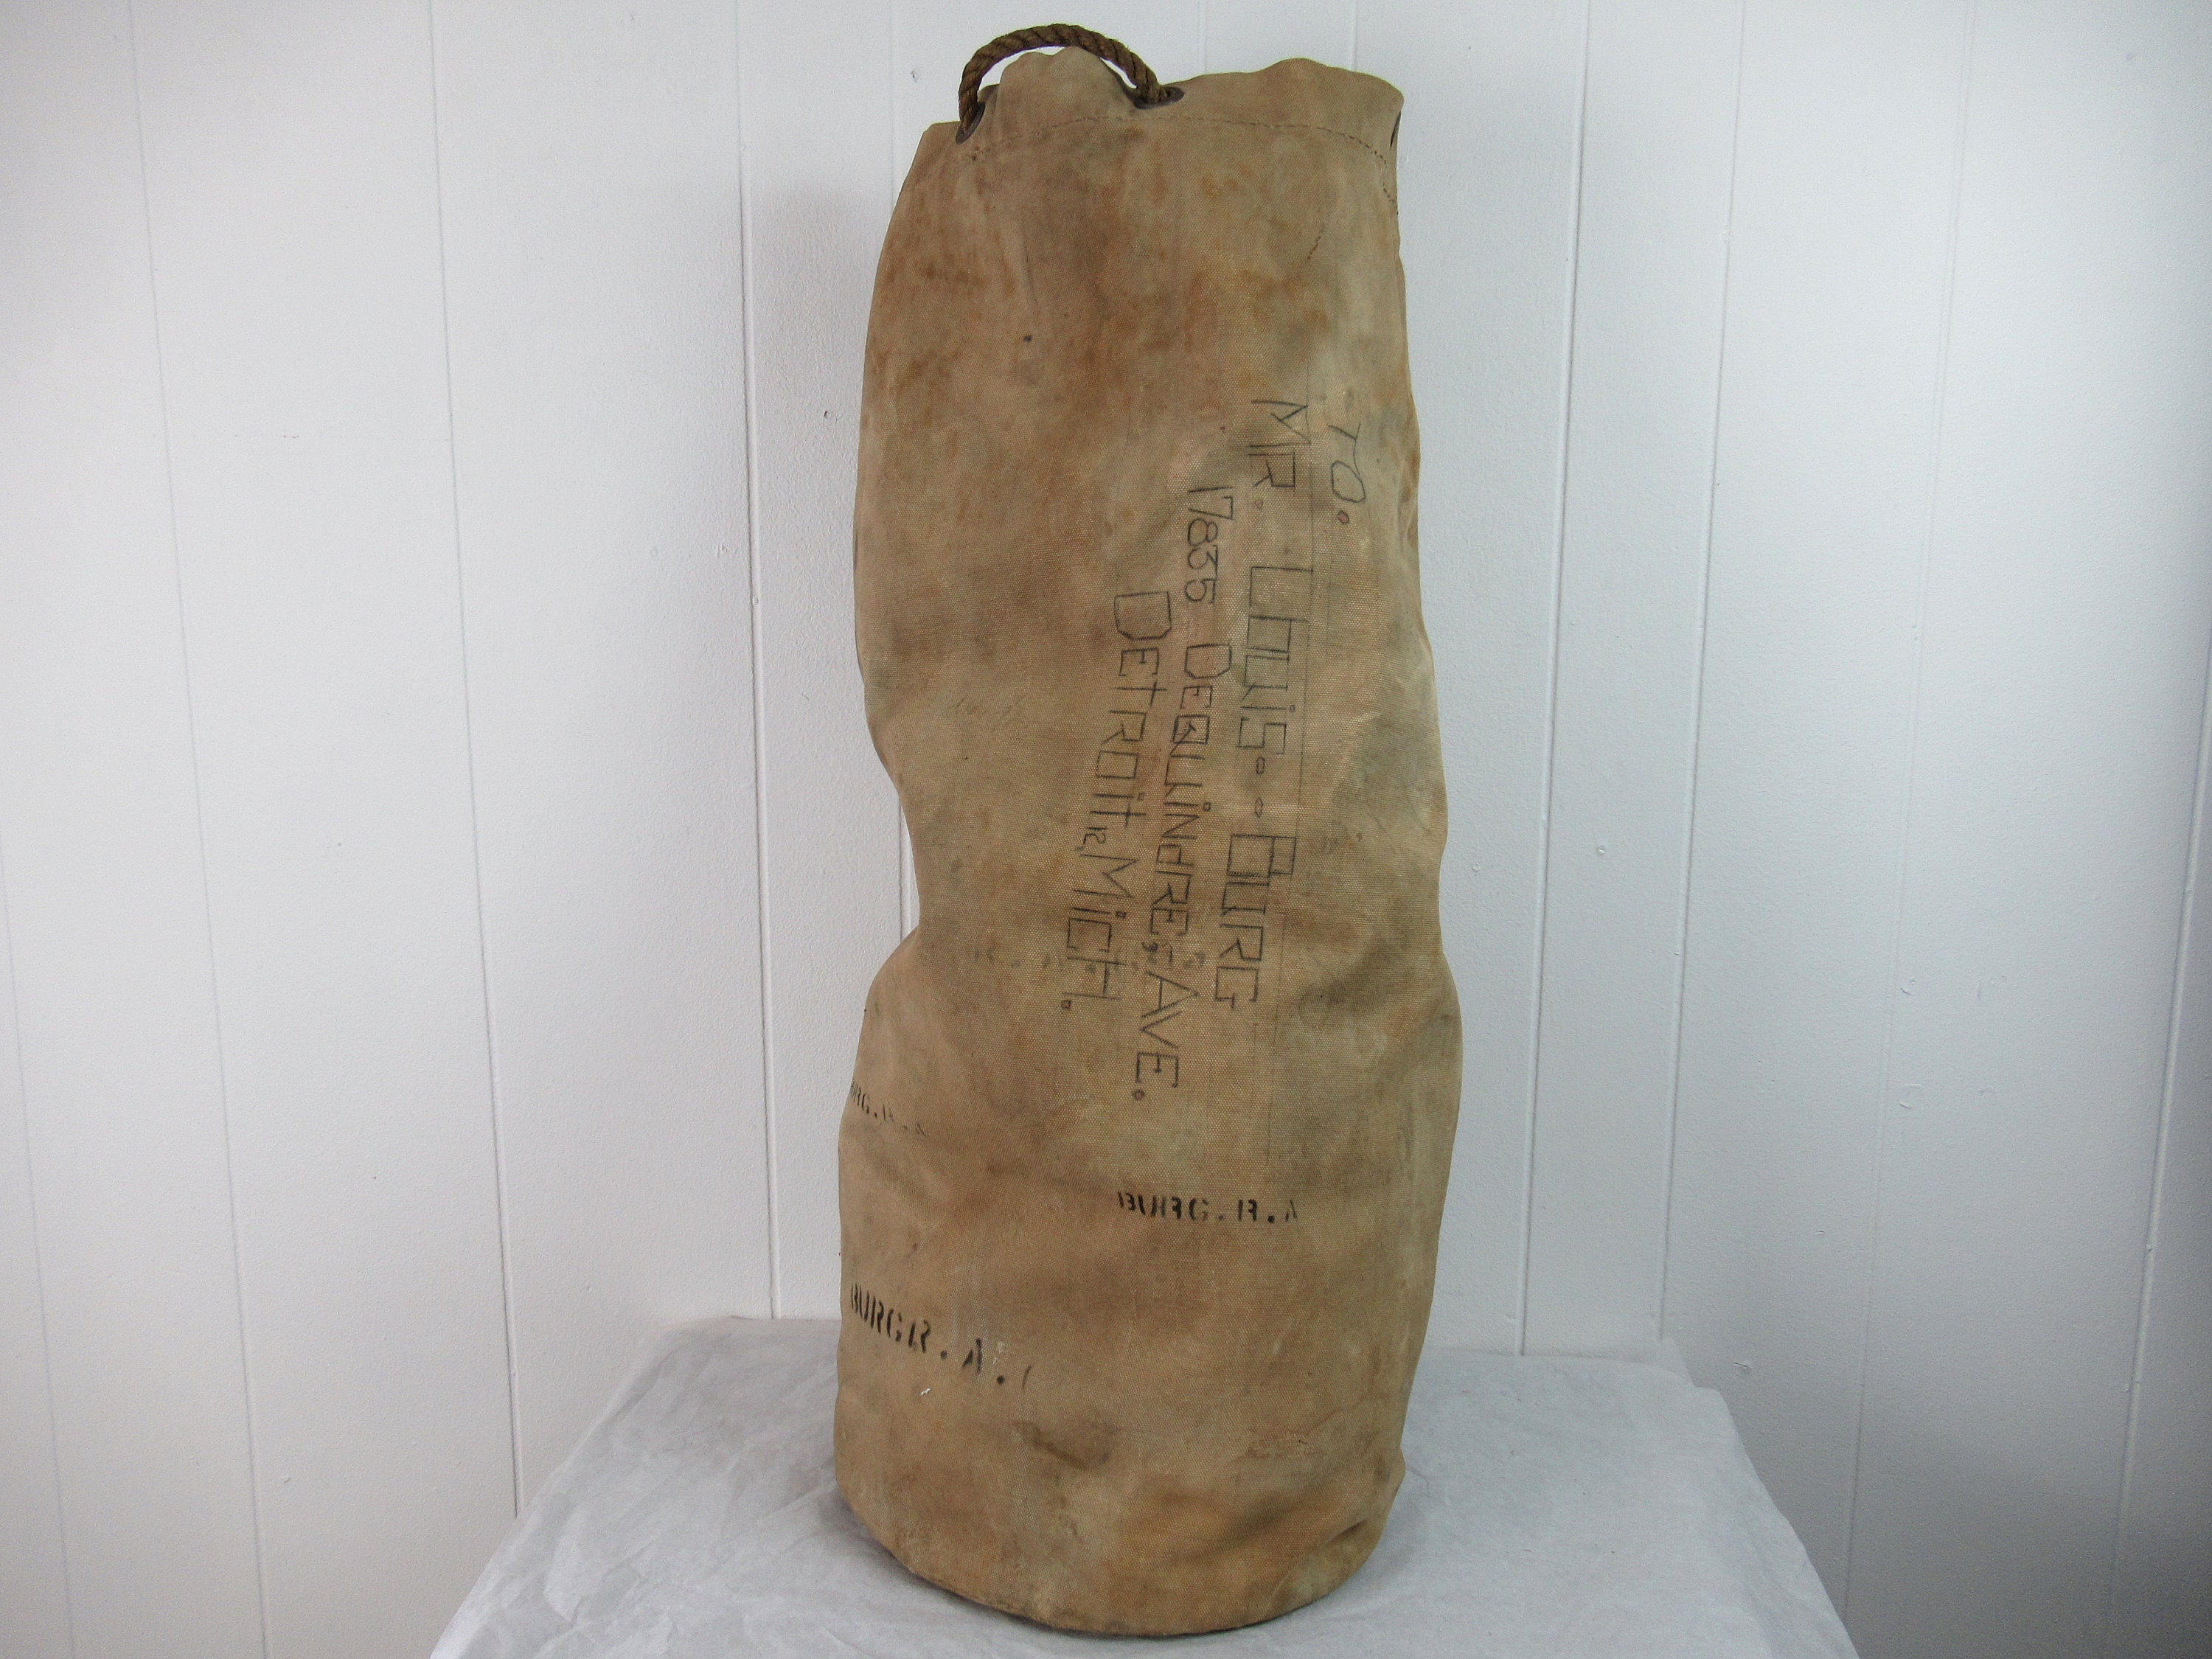 Military Style Duffle Bag - Cotton - Canvas - Vintage Collection - ApolloBox